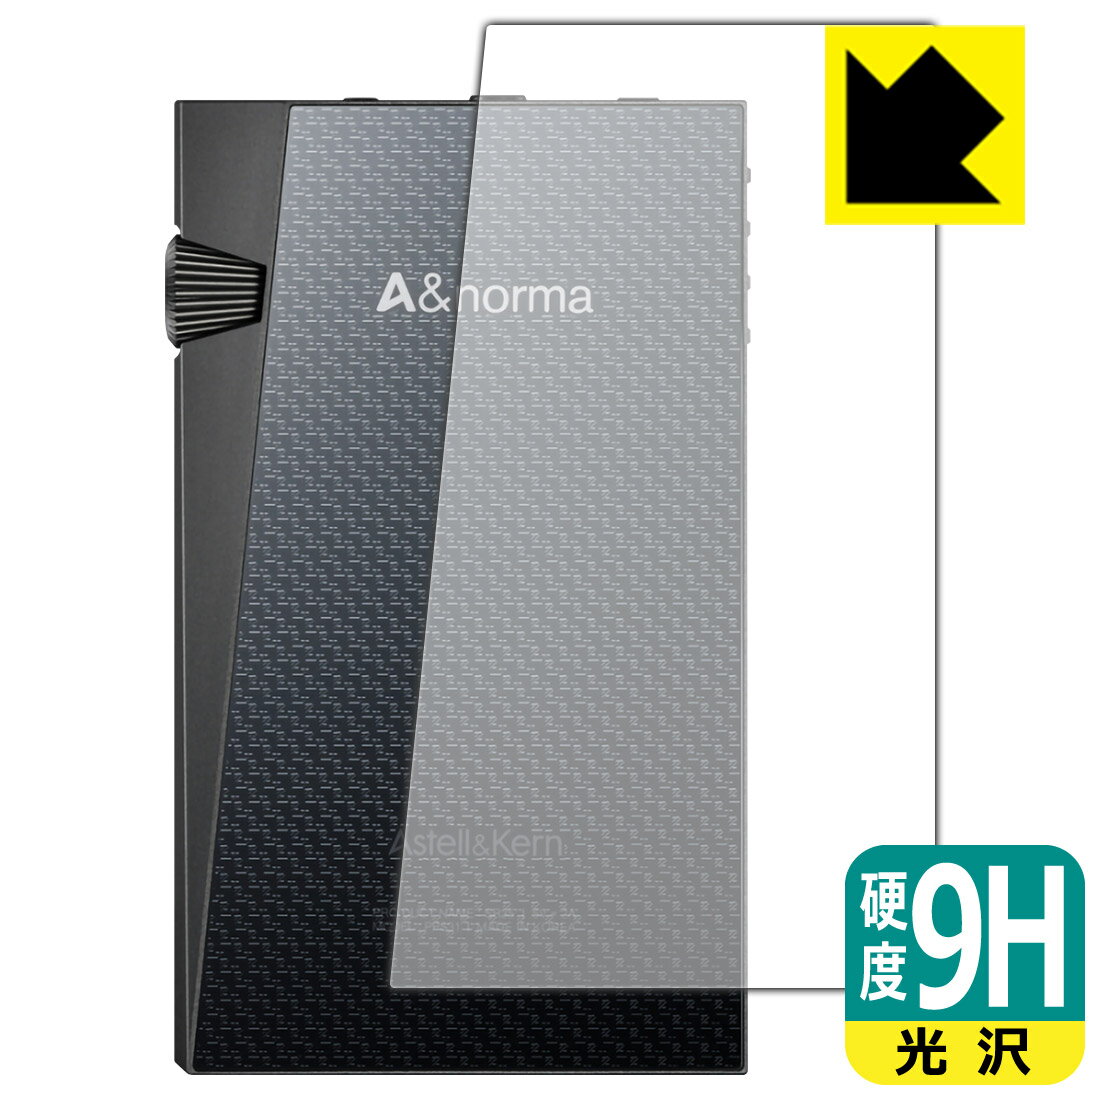 PDA工房 Astell&Kern A&norma SR35 対応 9H高硬度[光沢] 保護 フィルム [背面用] 日本製 自社製造直販